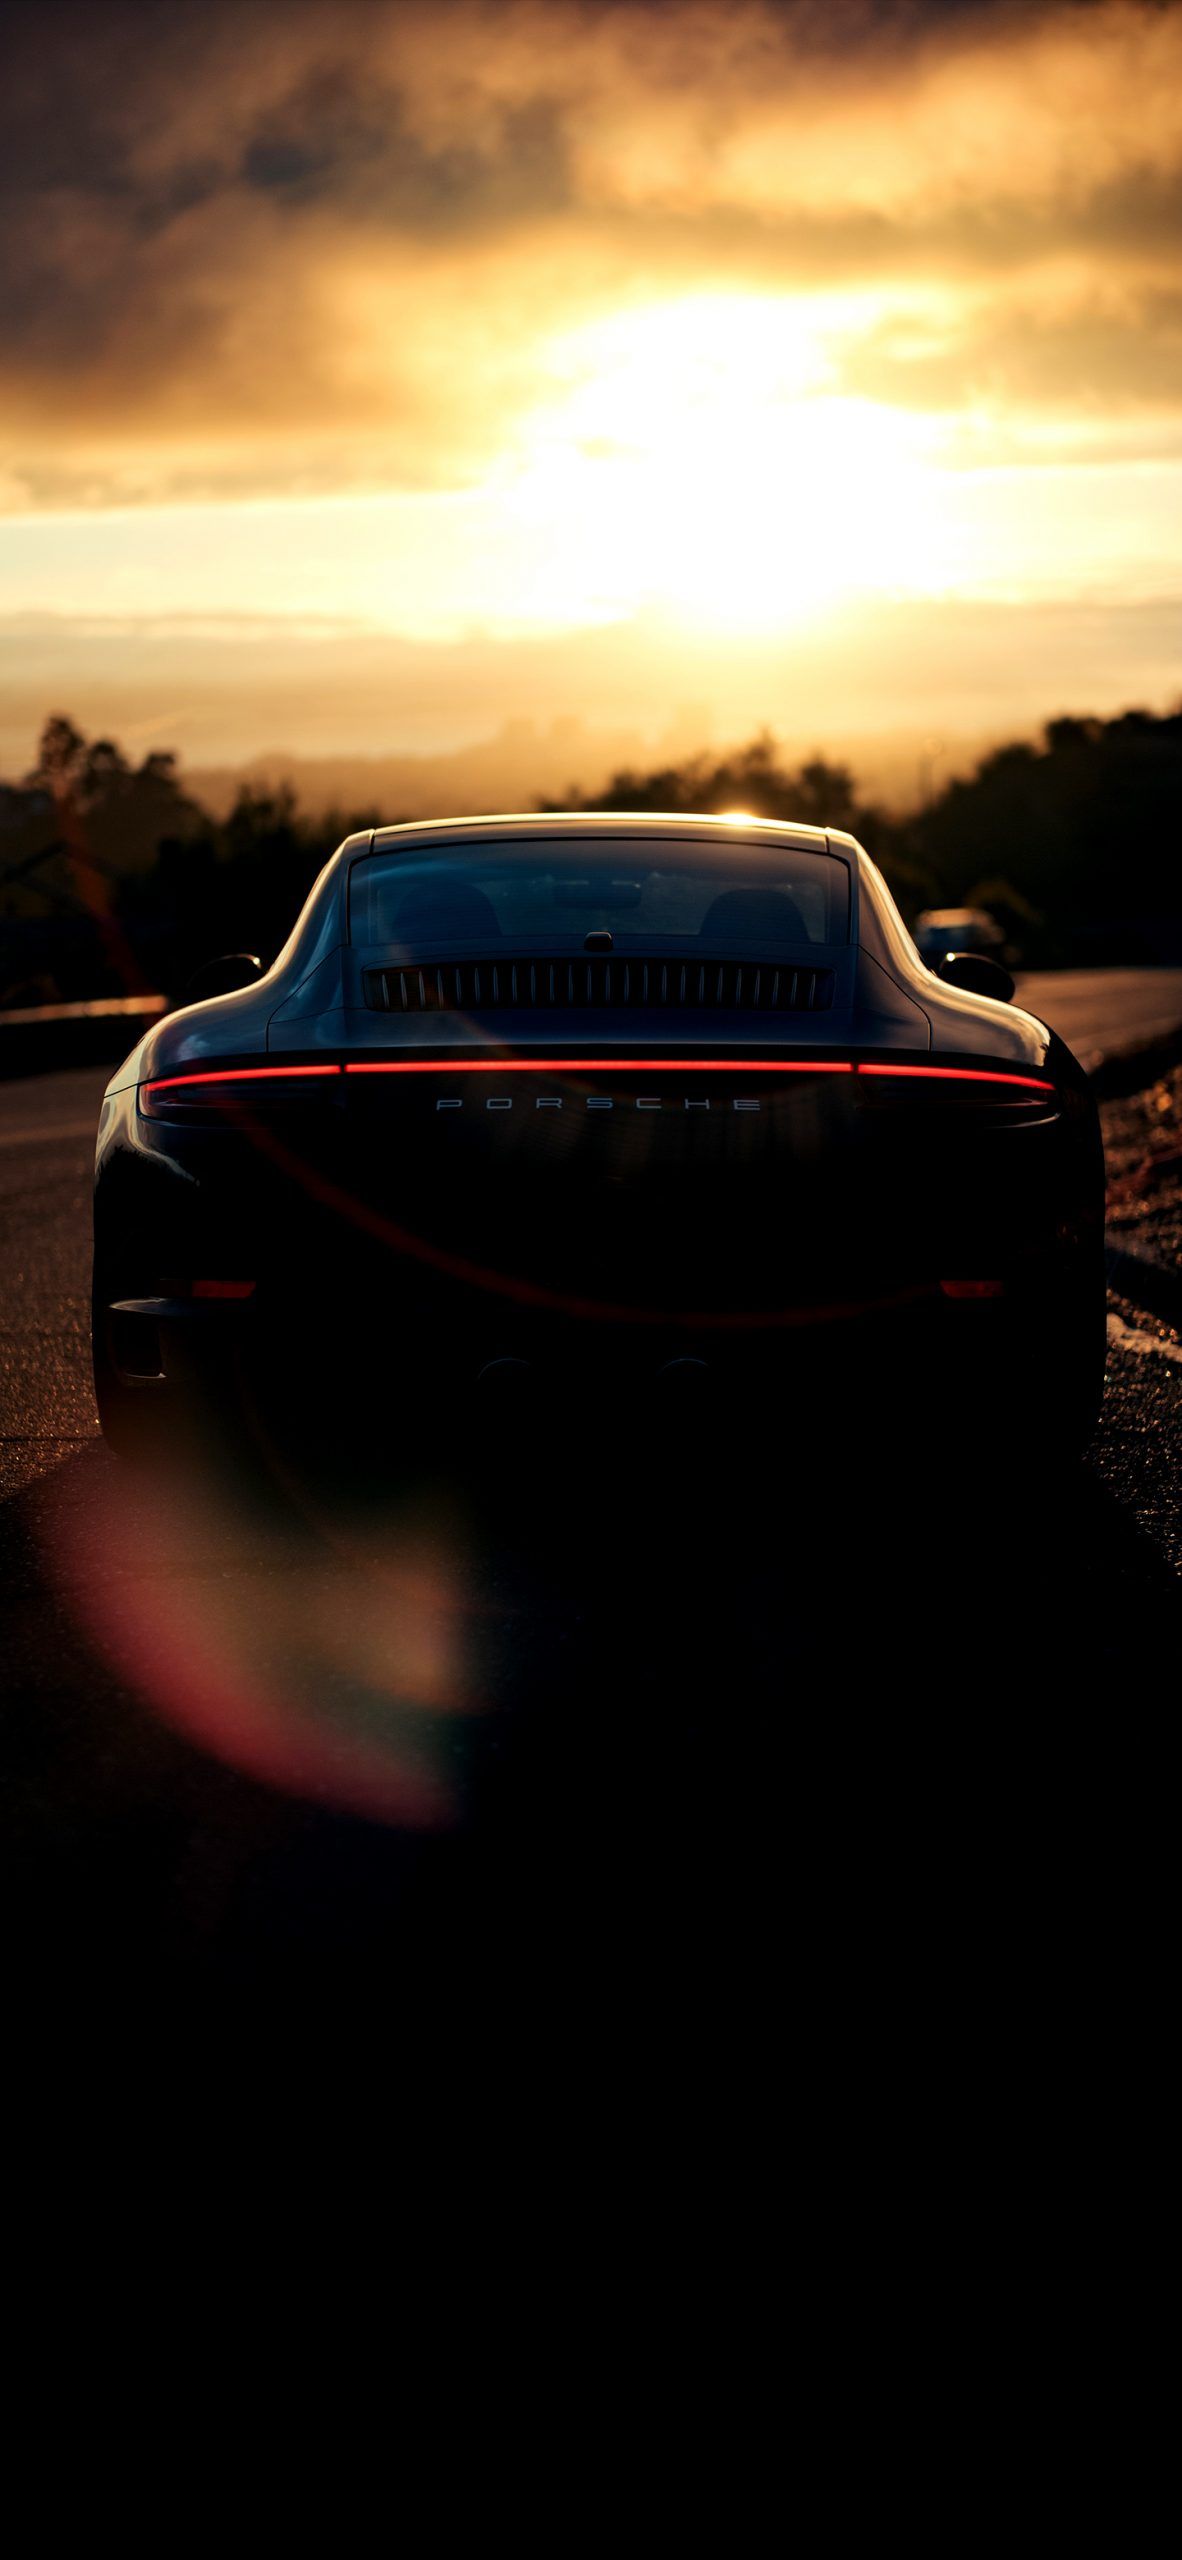 Porsche 911 On Sunset Amoled Wallpaper